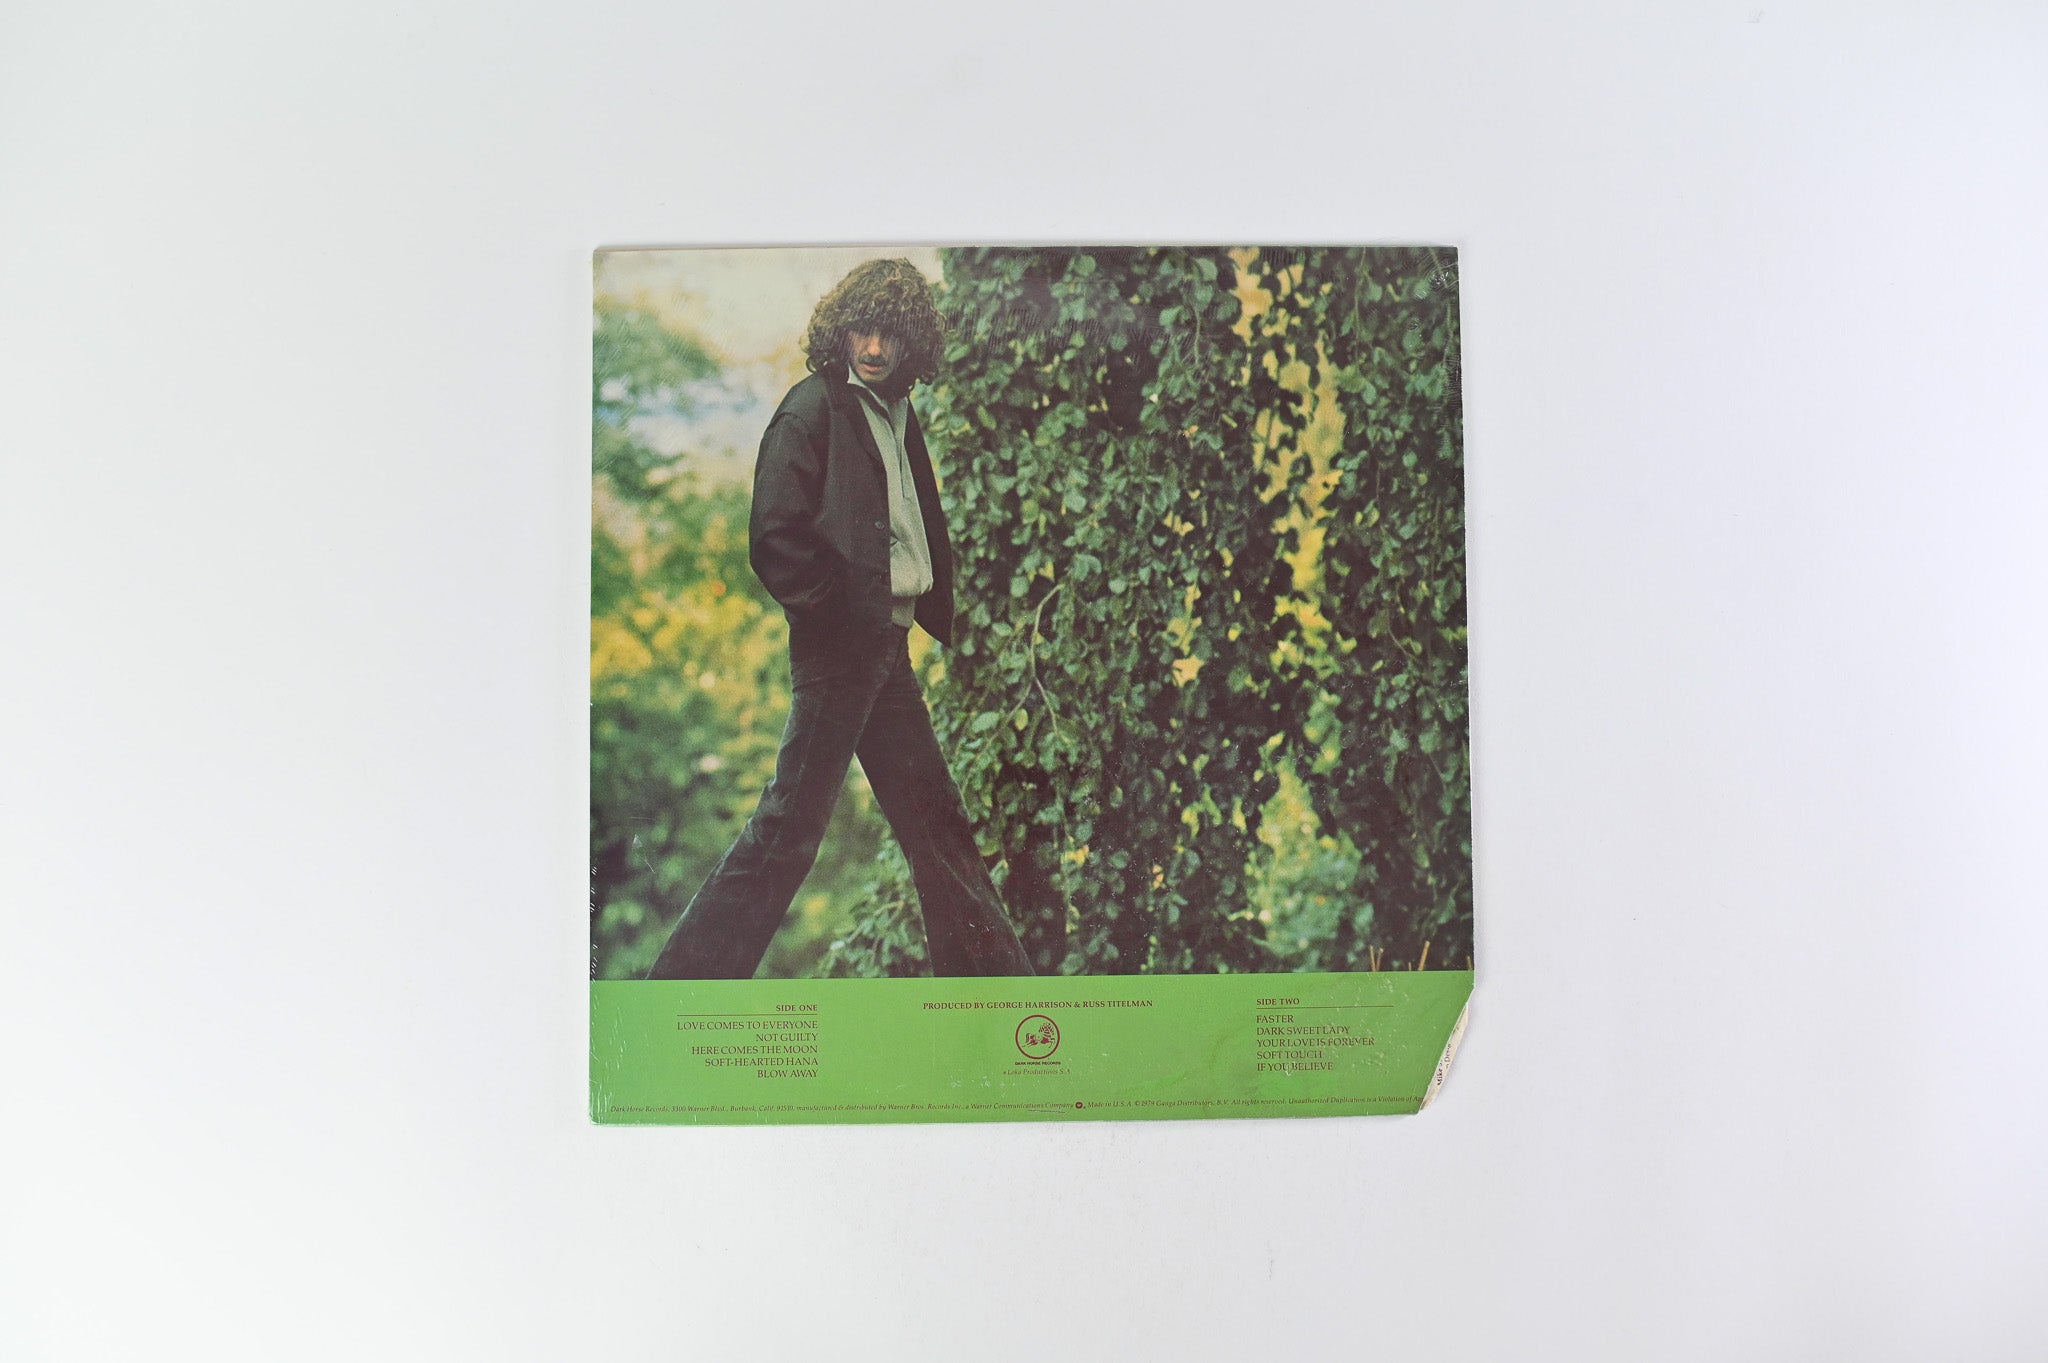 George Harrison - George Harrison SEALED on Dark Horse Records